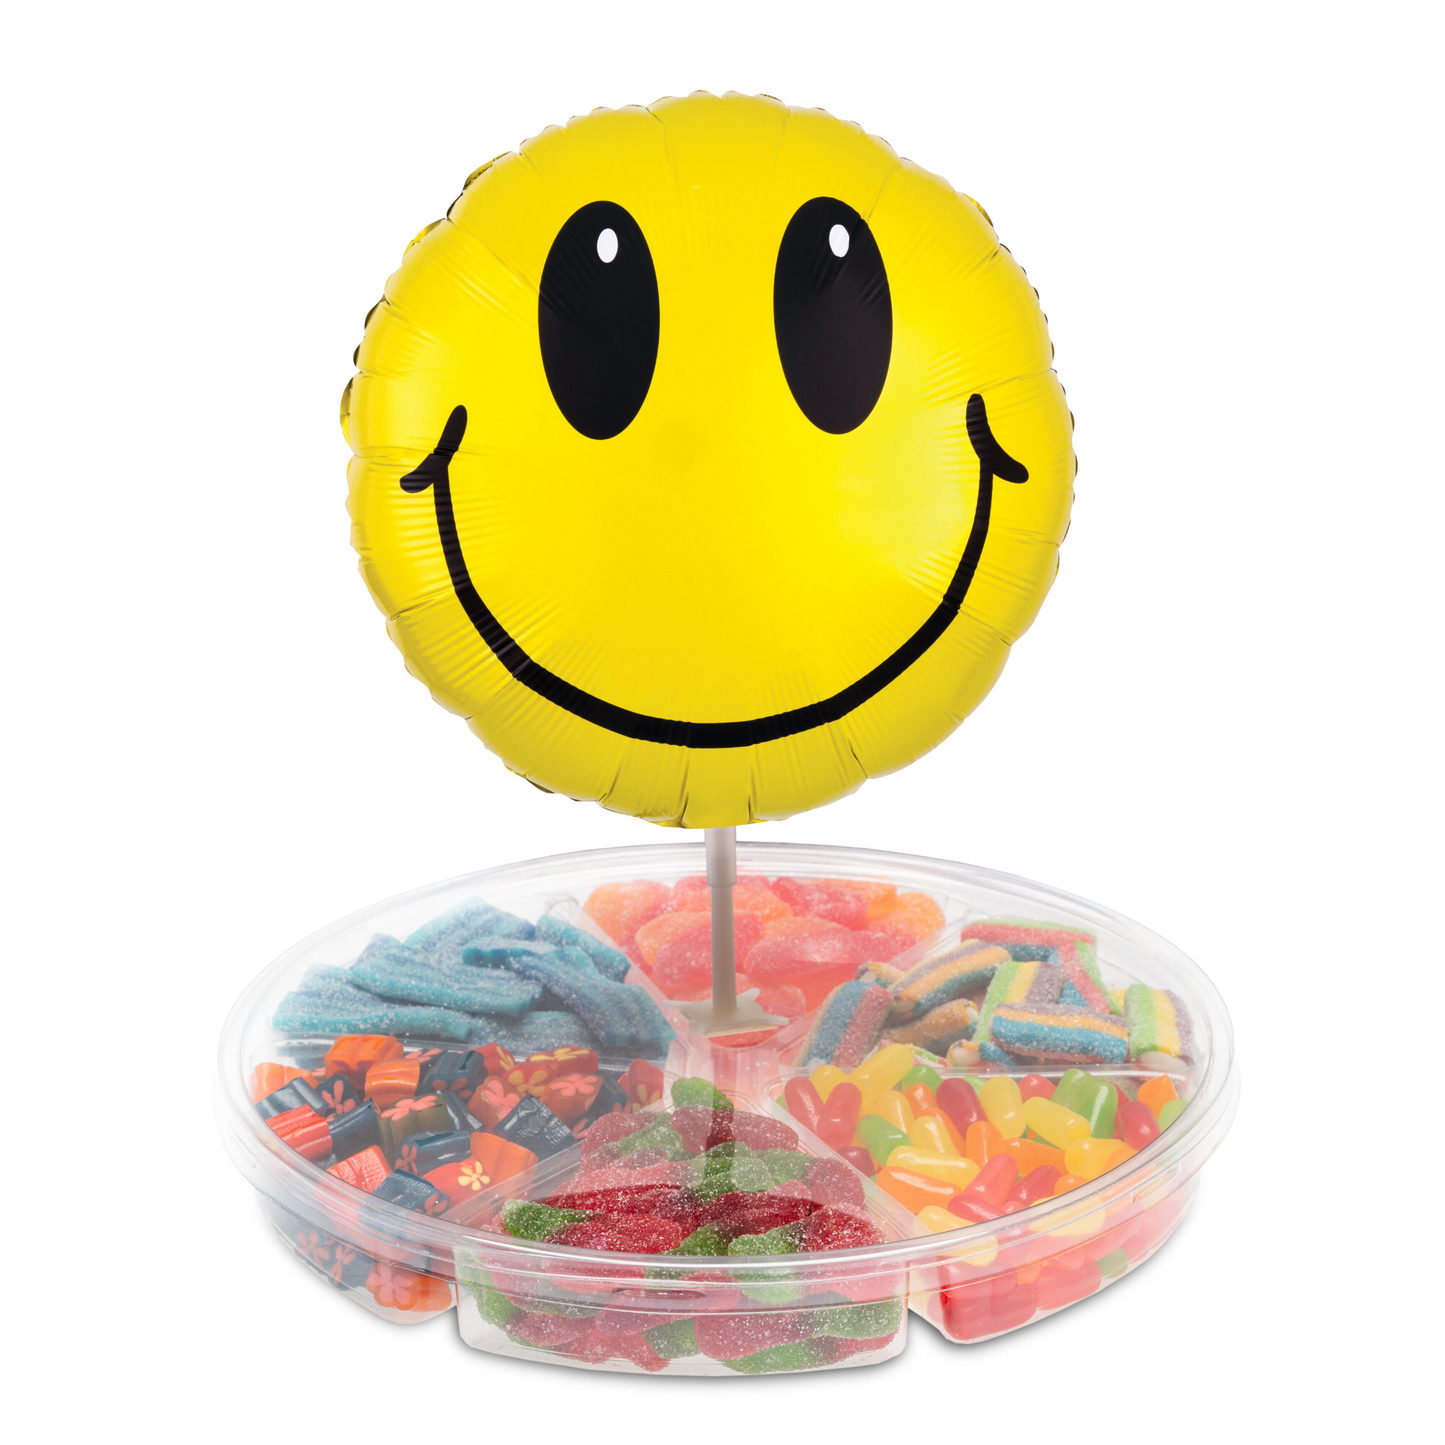 Medium Platter with Smiley Face Balloon